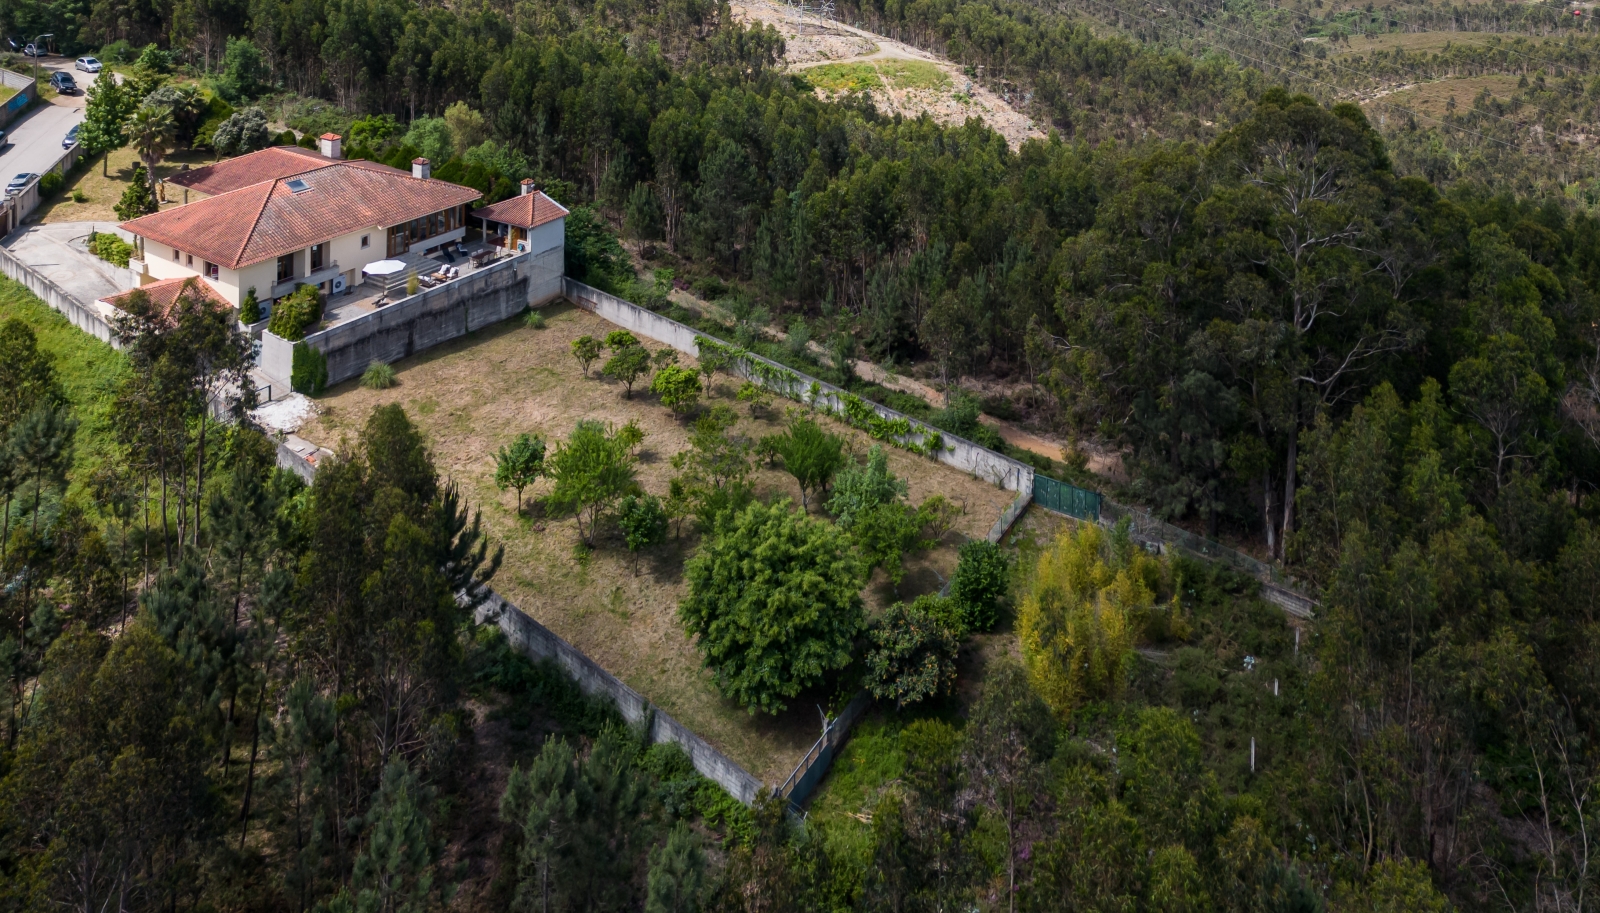 5 bedroom villa with garden and views, for sale, in Foz do Sousa in Gondomar, Porto, Portugal_225234